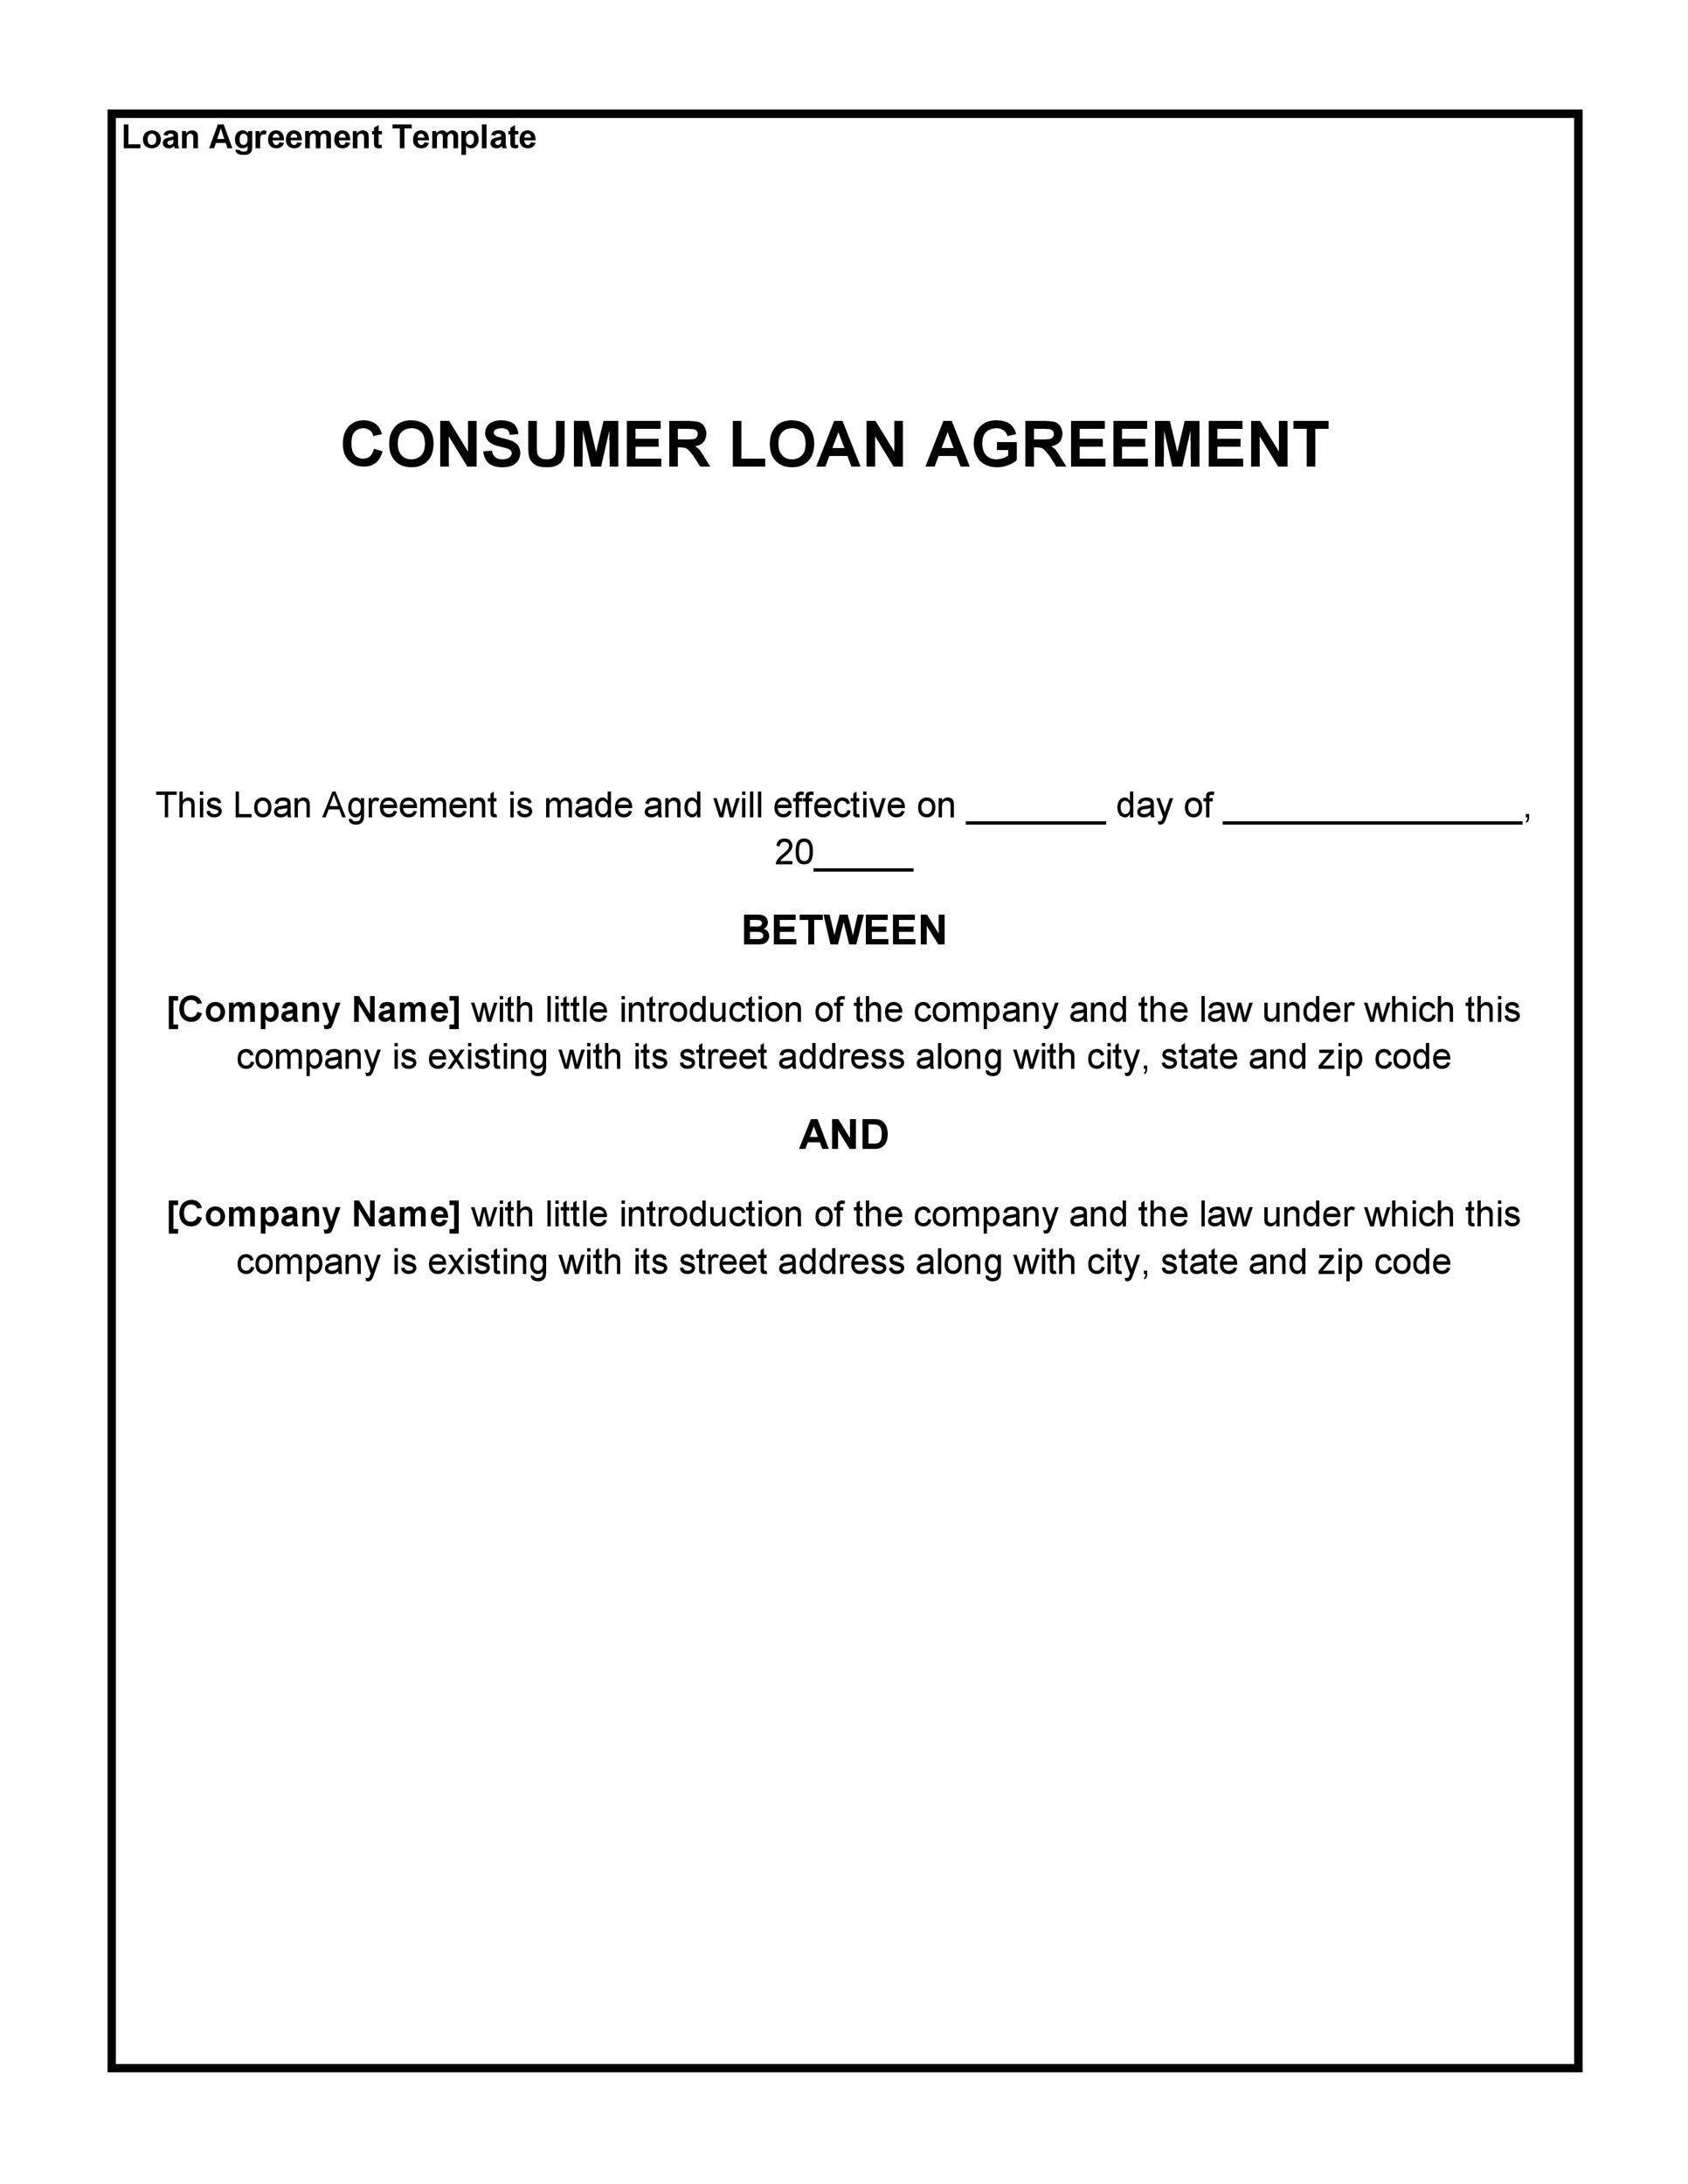 40+ Free Loan Agreement Templates [Word & PDF] - Template Lab